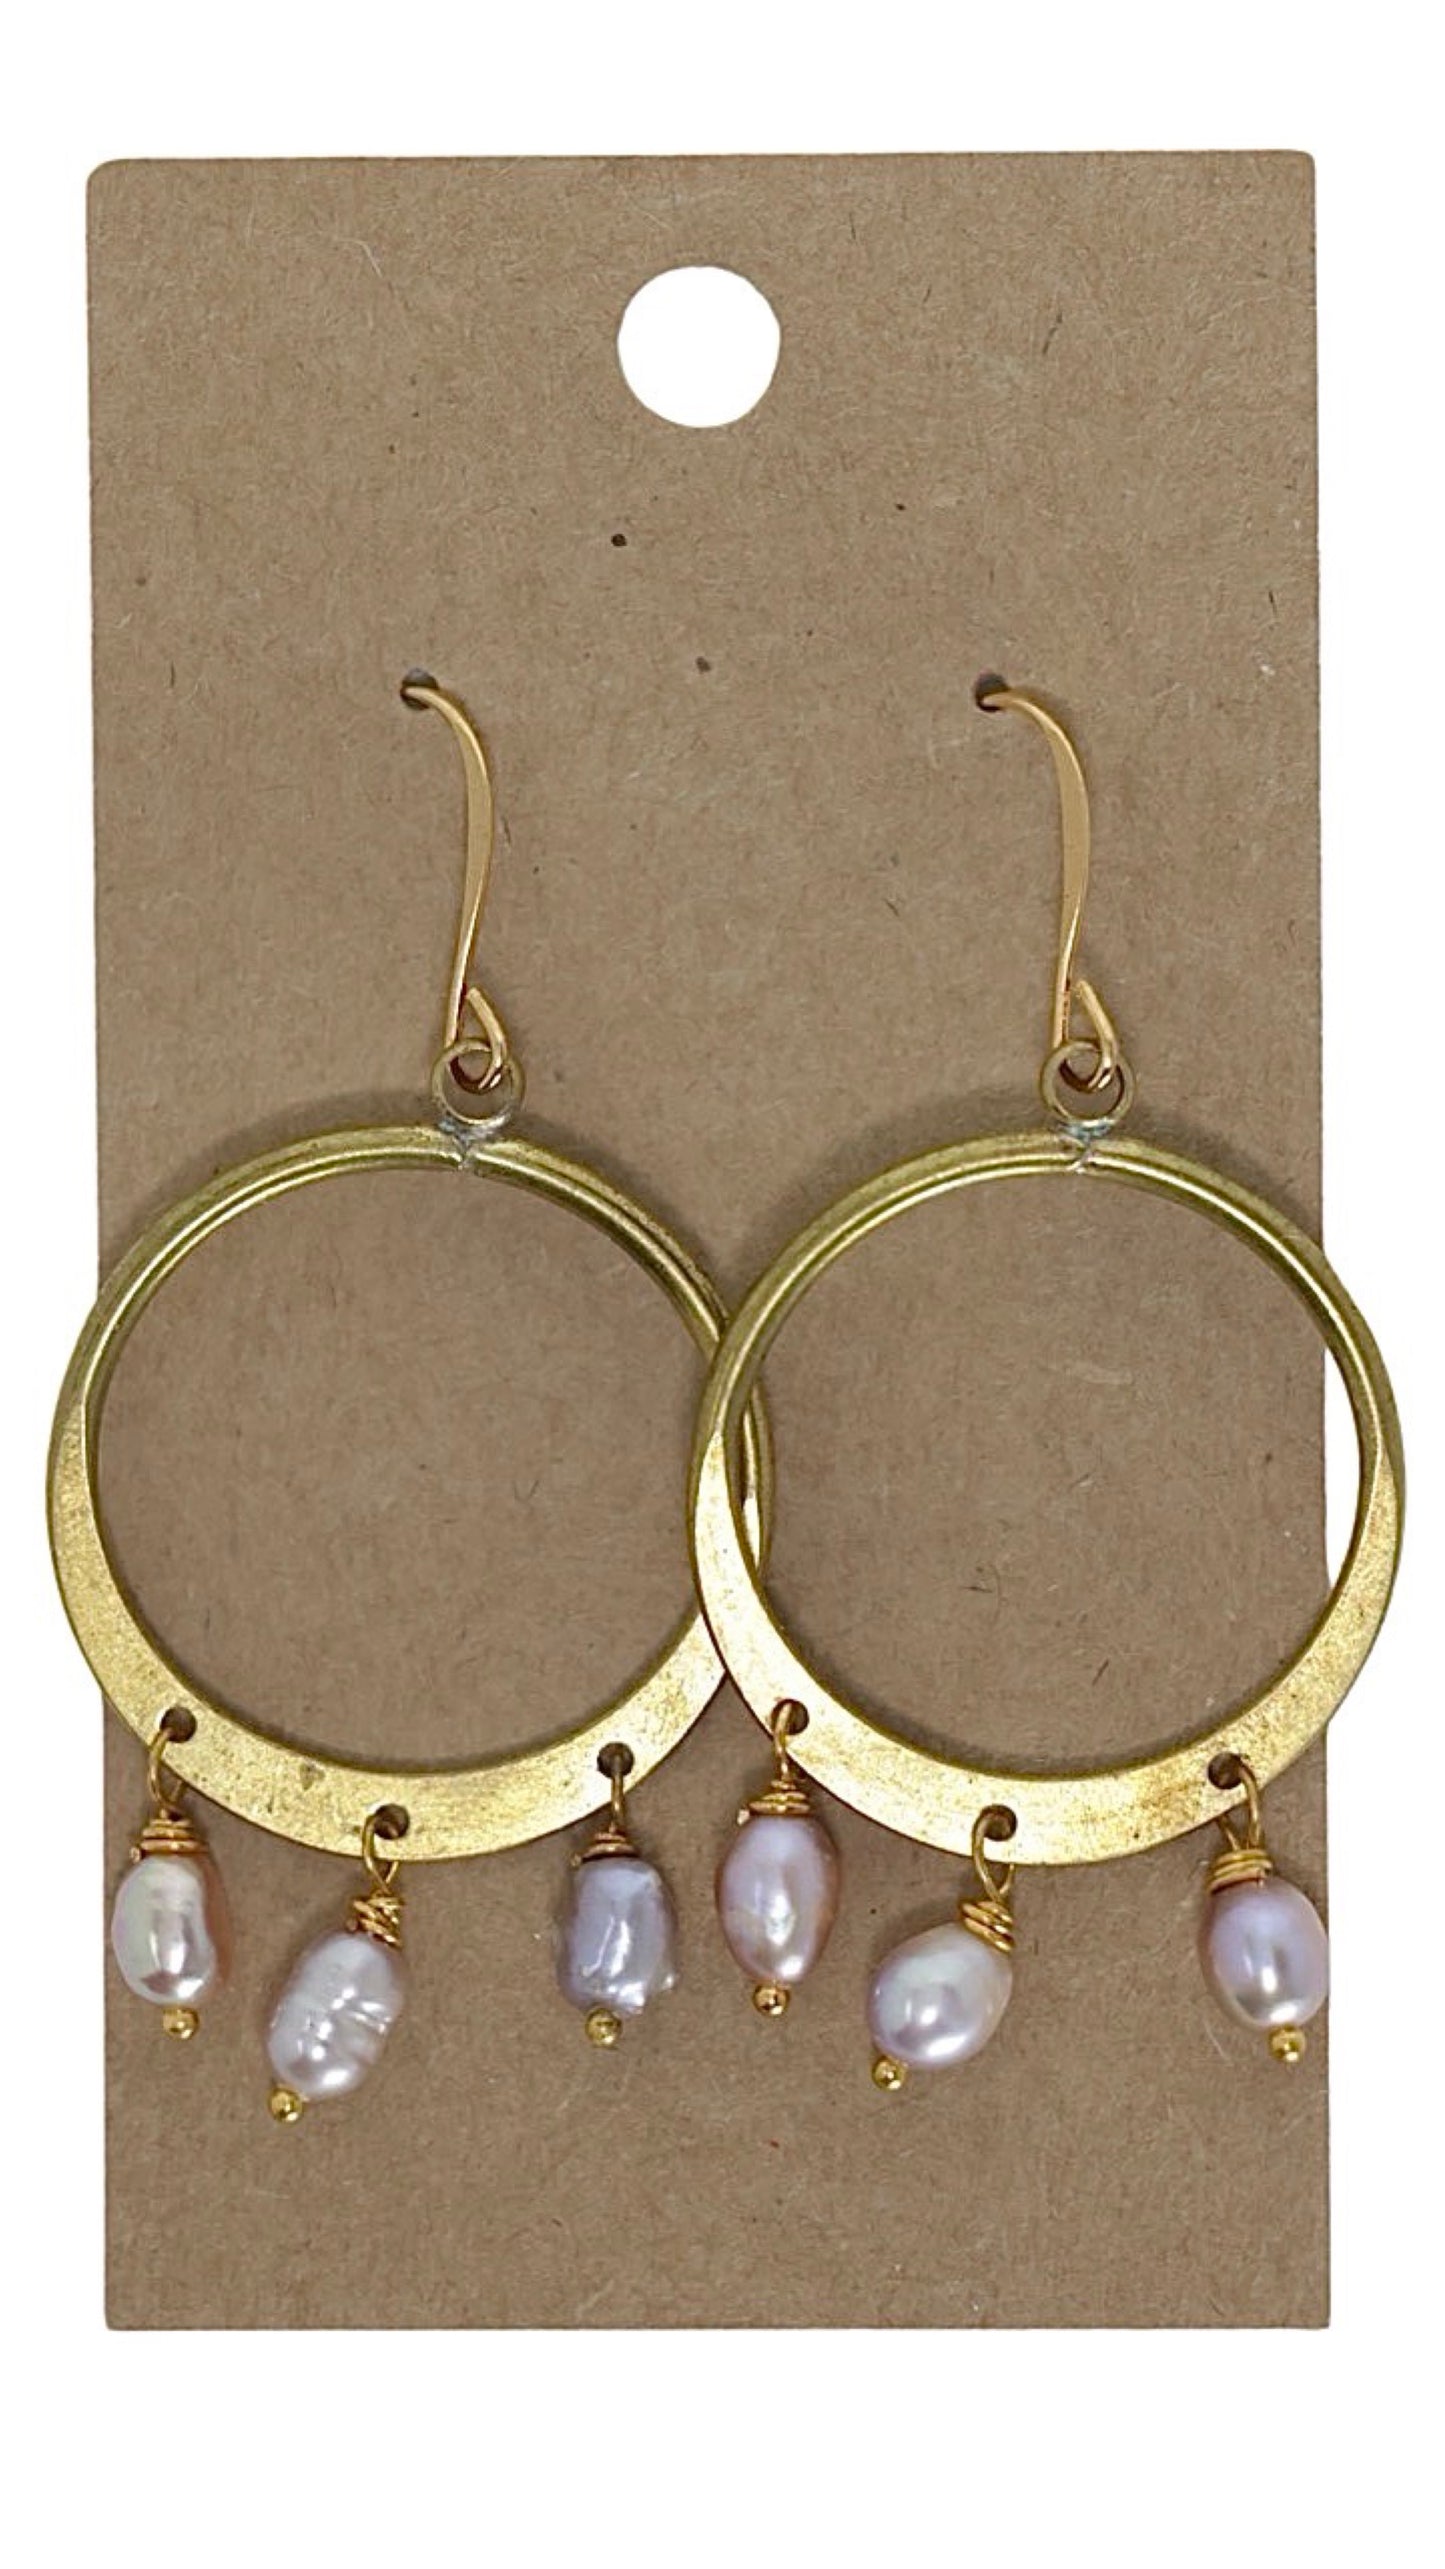 Gypsy Feet Gems "Circle Hoops with triple Freshwater Pearl drops" Earrings